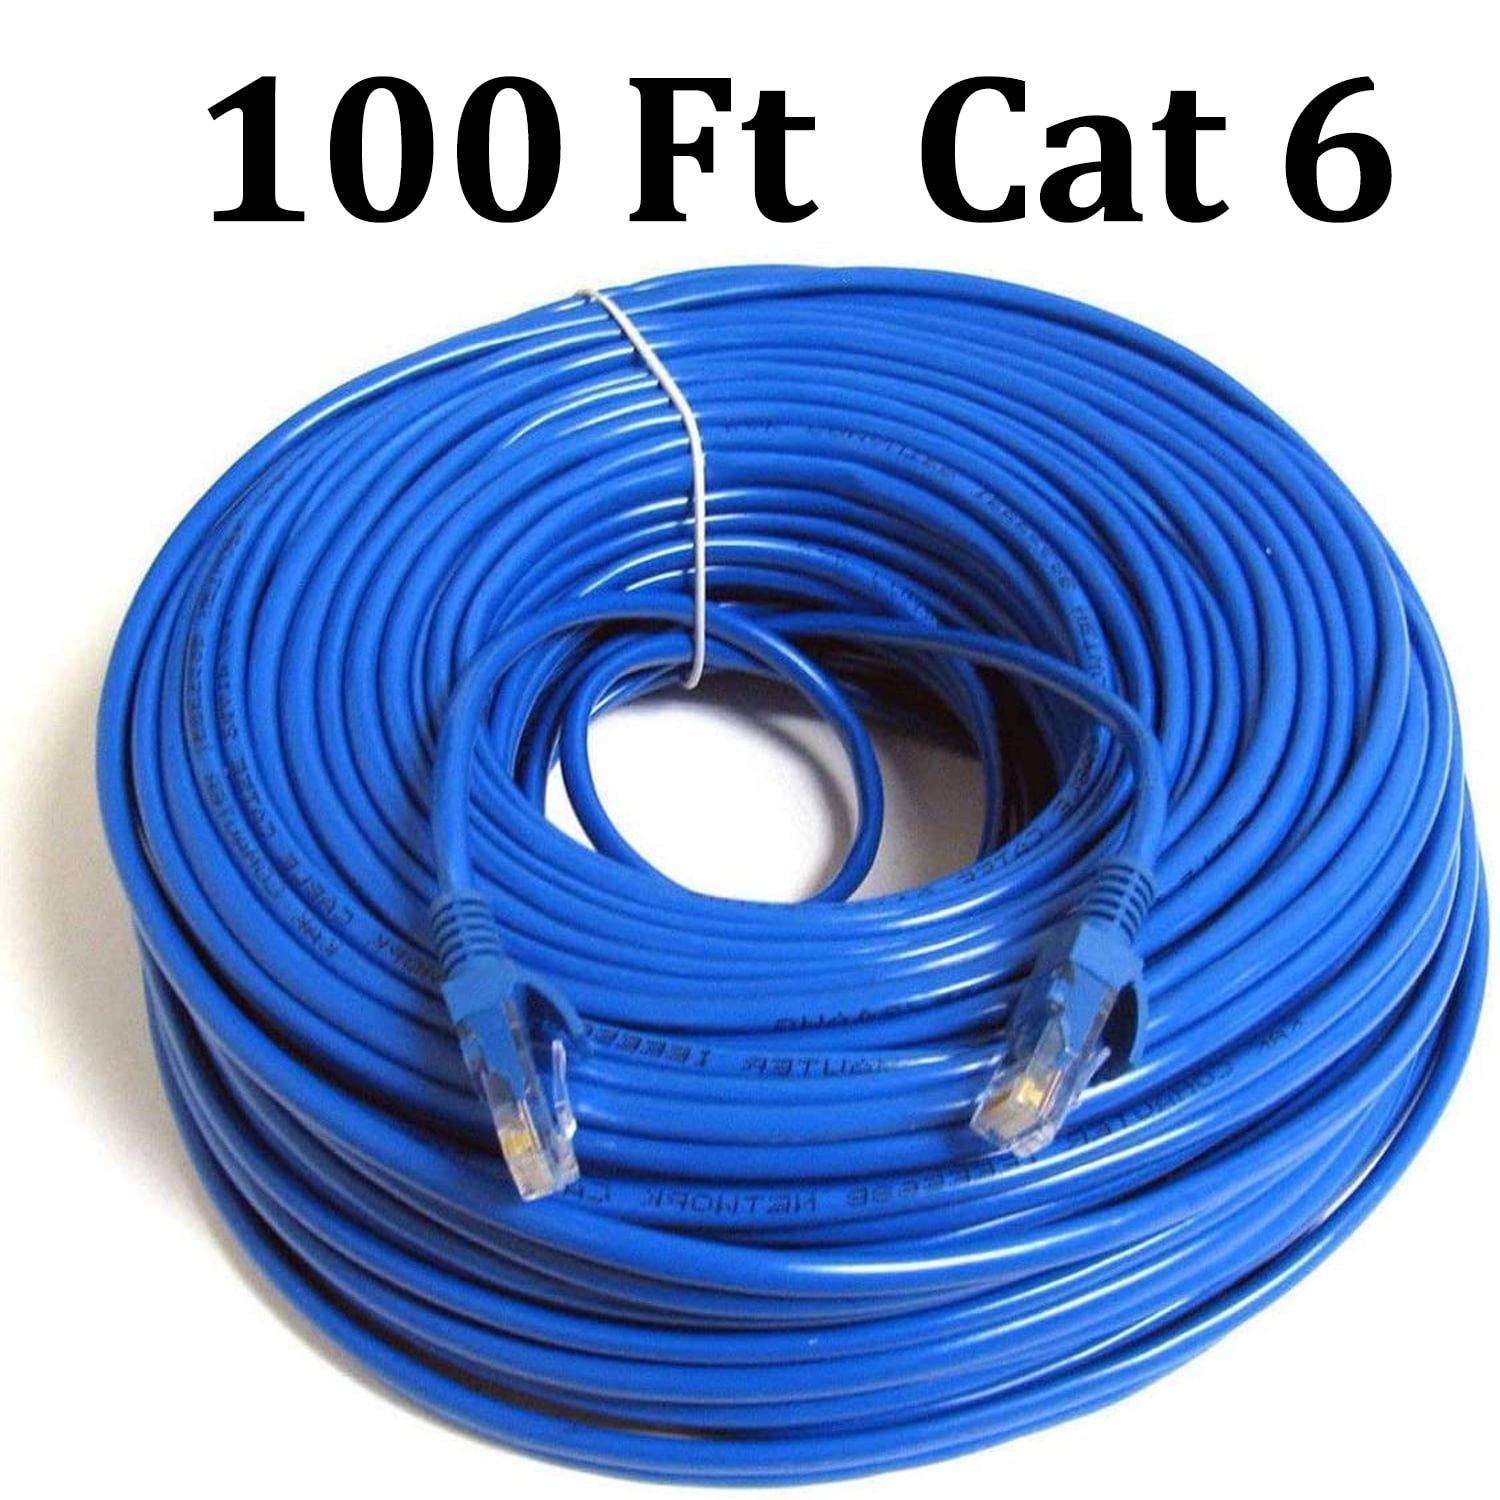 100ft Cat6 Cable (Cat6 Cable, Cat 6 Cable) Blue RJ45 LAN